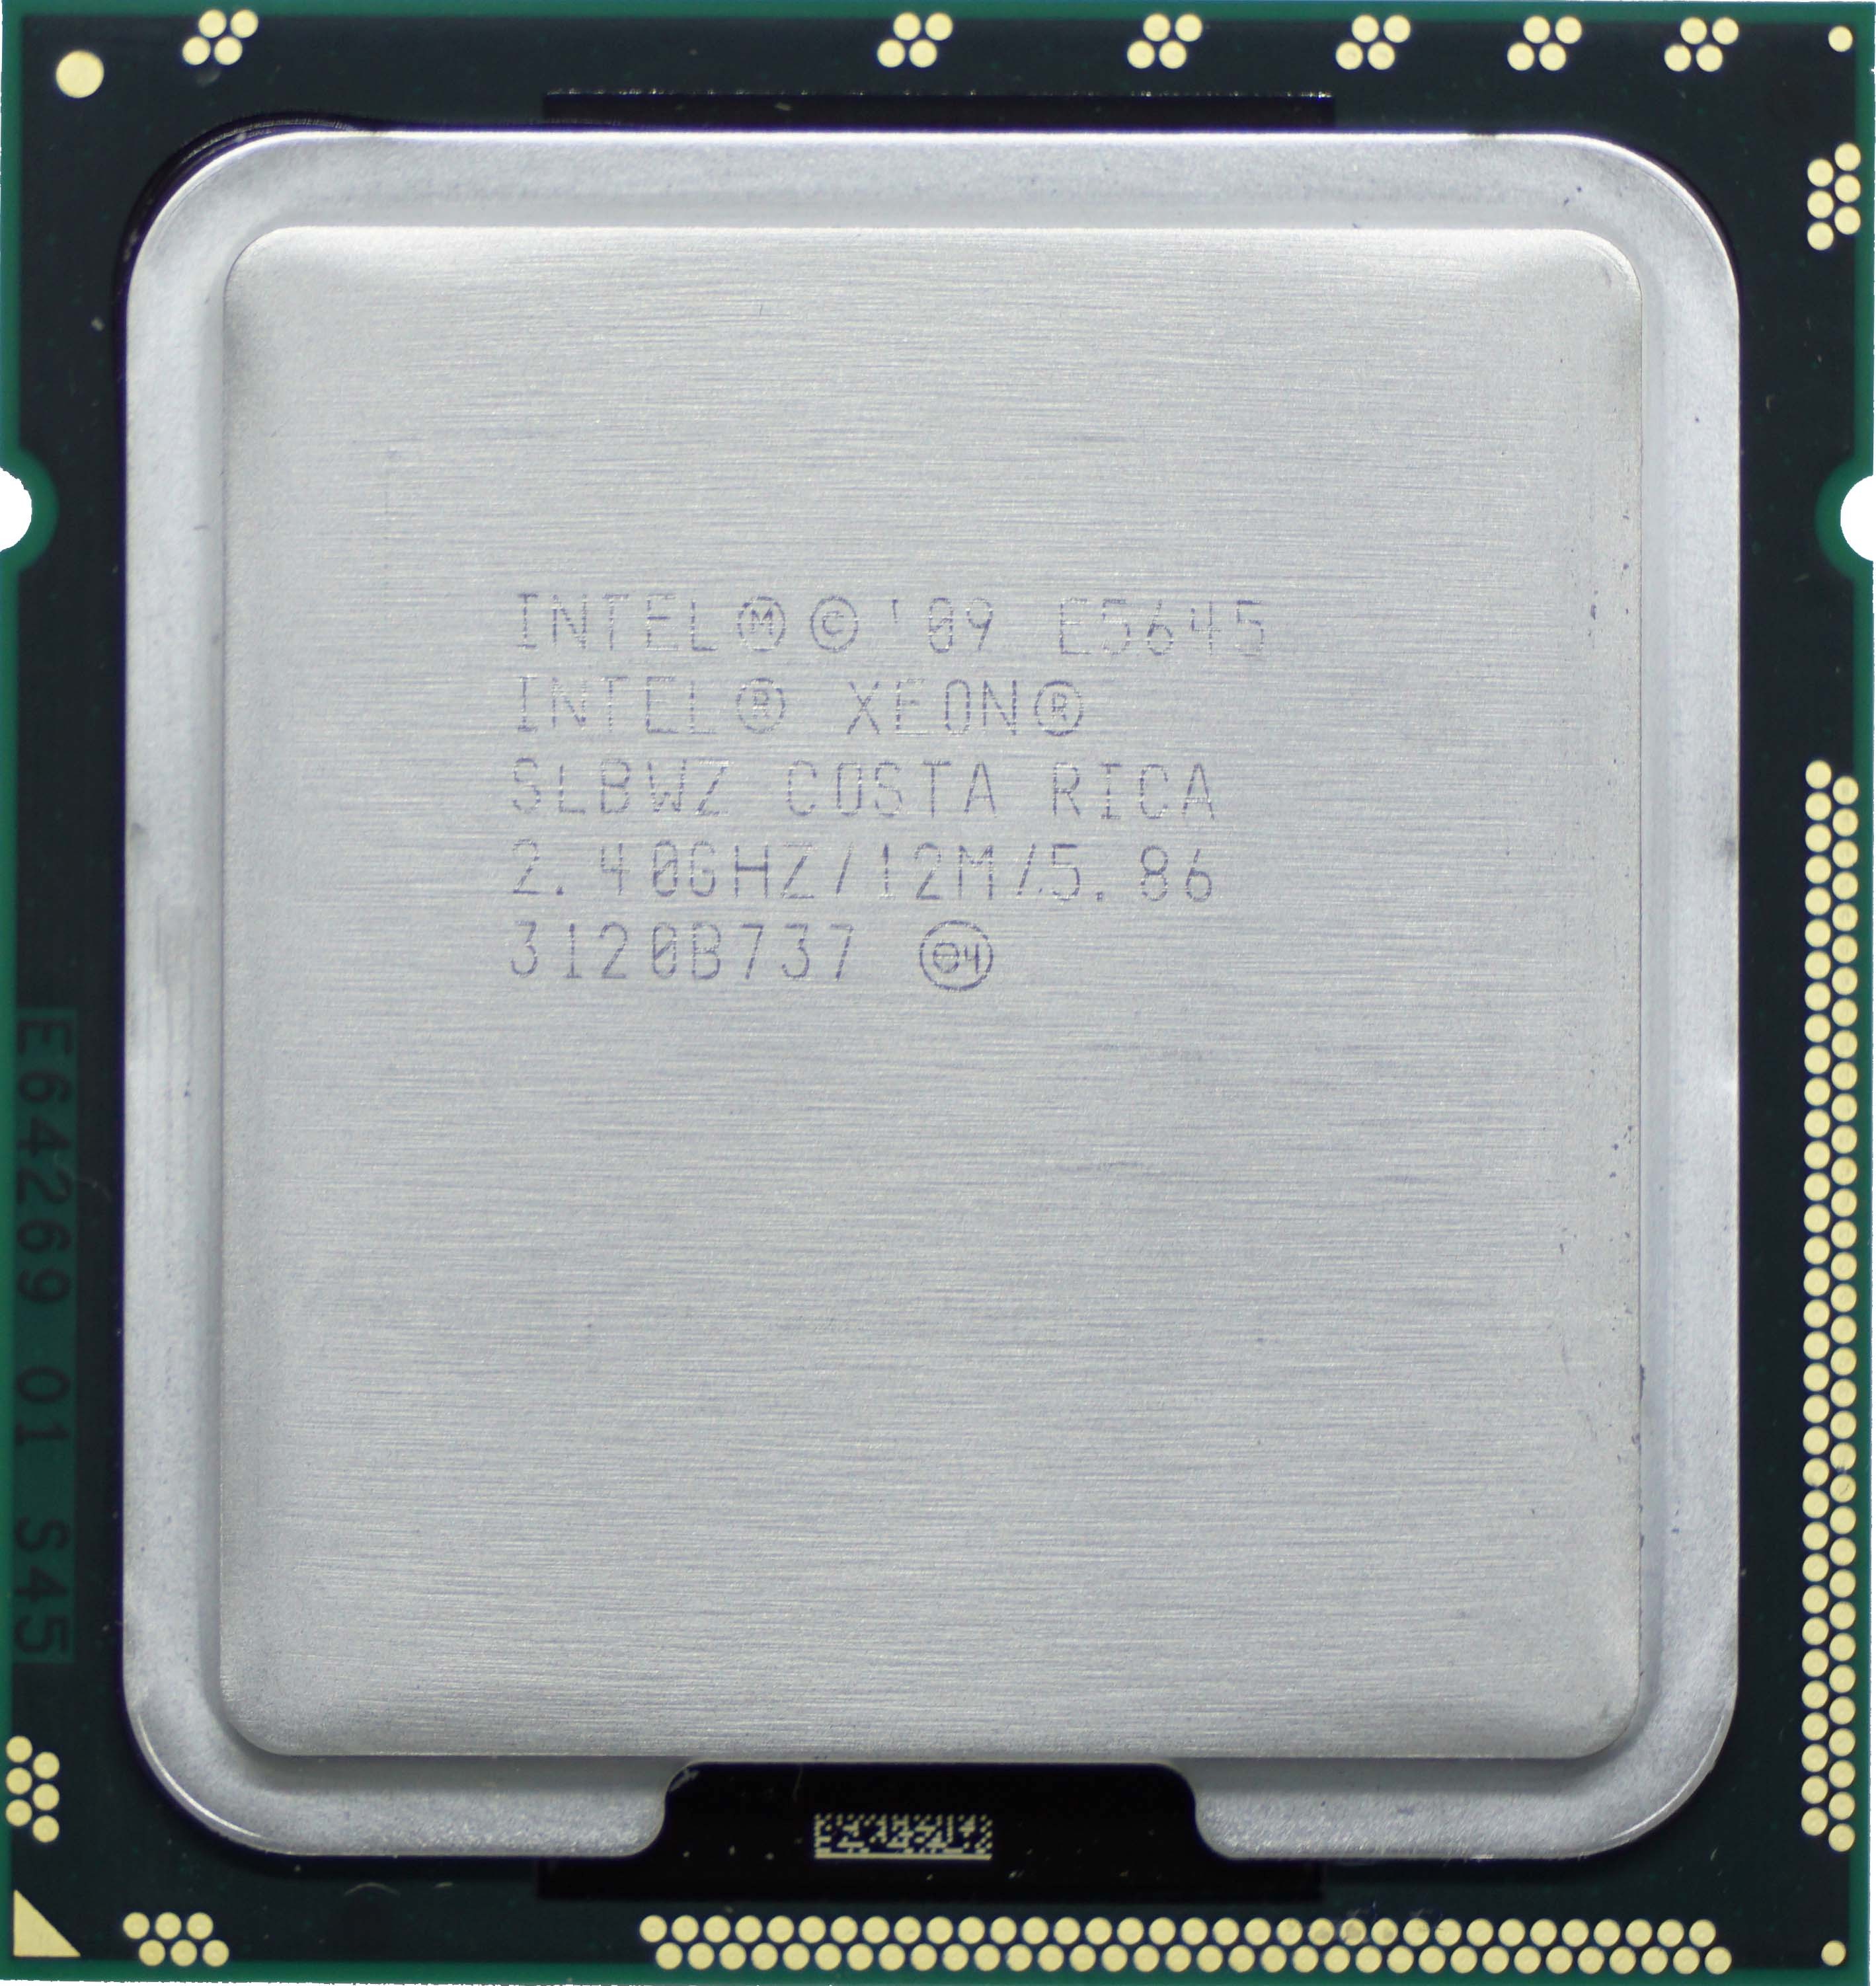 Intel Xeon E5645 (SLBWZ) 2.40Ghz Hexa (6) Core LGA1366 80W CPU